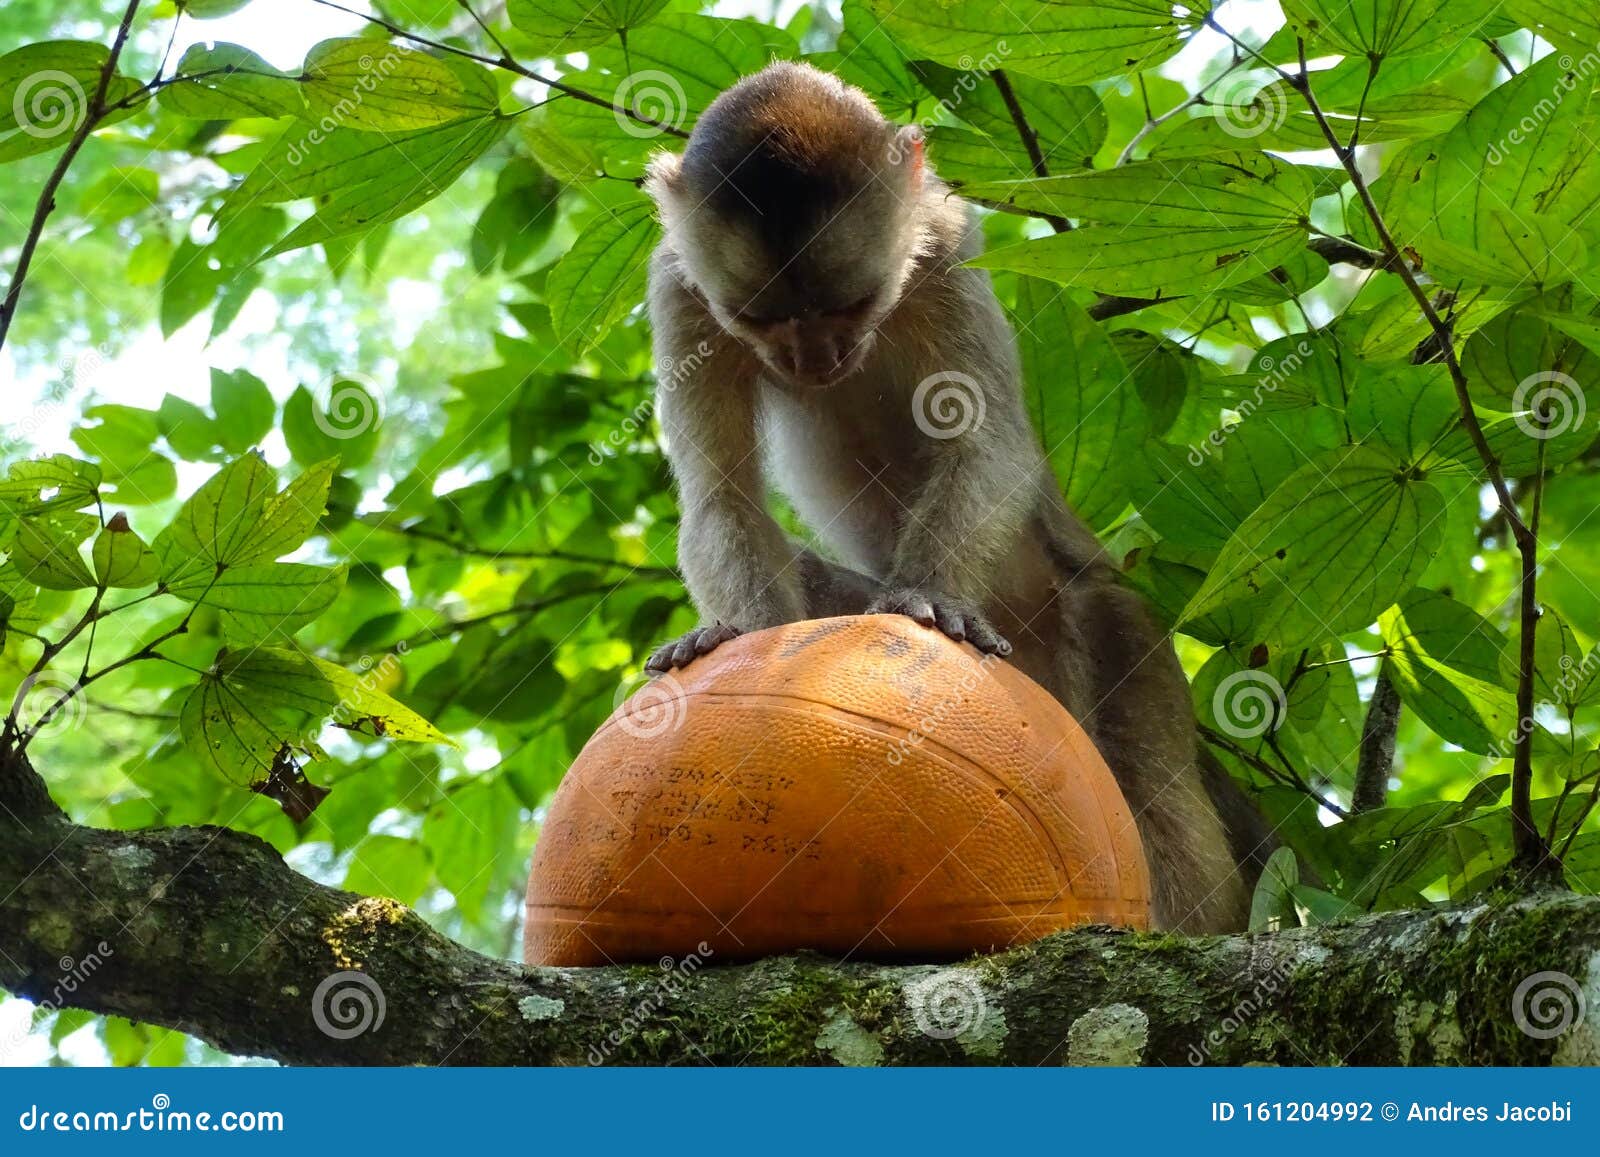 Cute Baby Capuchin Monkeys